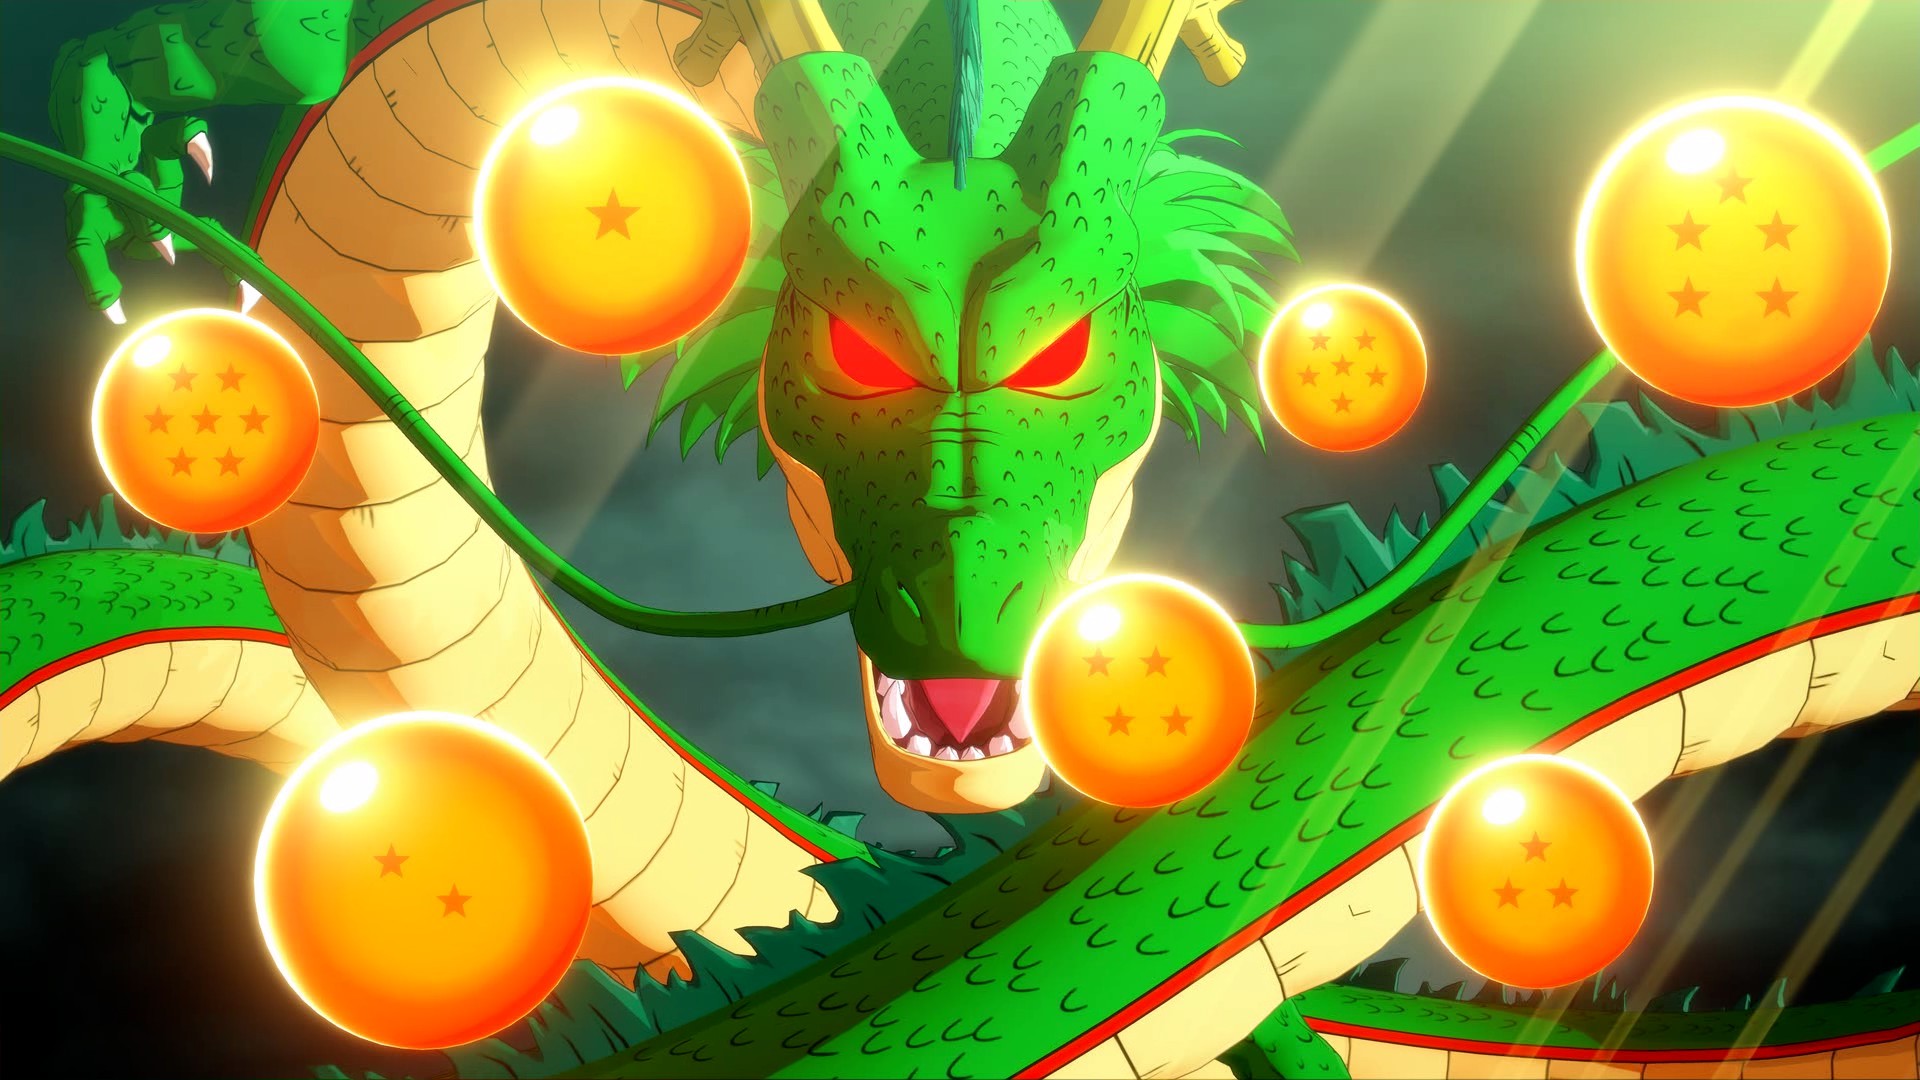 Dragon Ball Z: Kakarot is more than a fighting game - Polygon